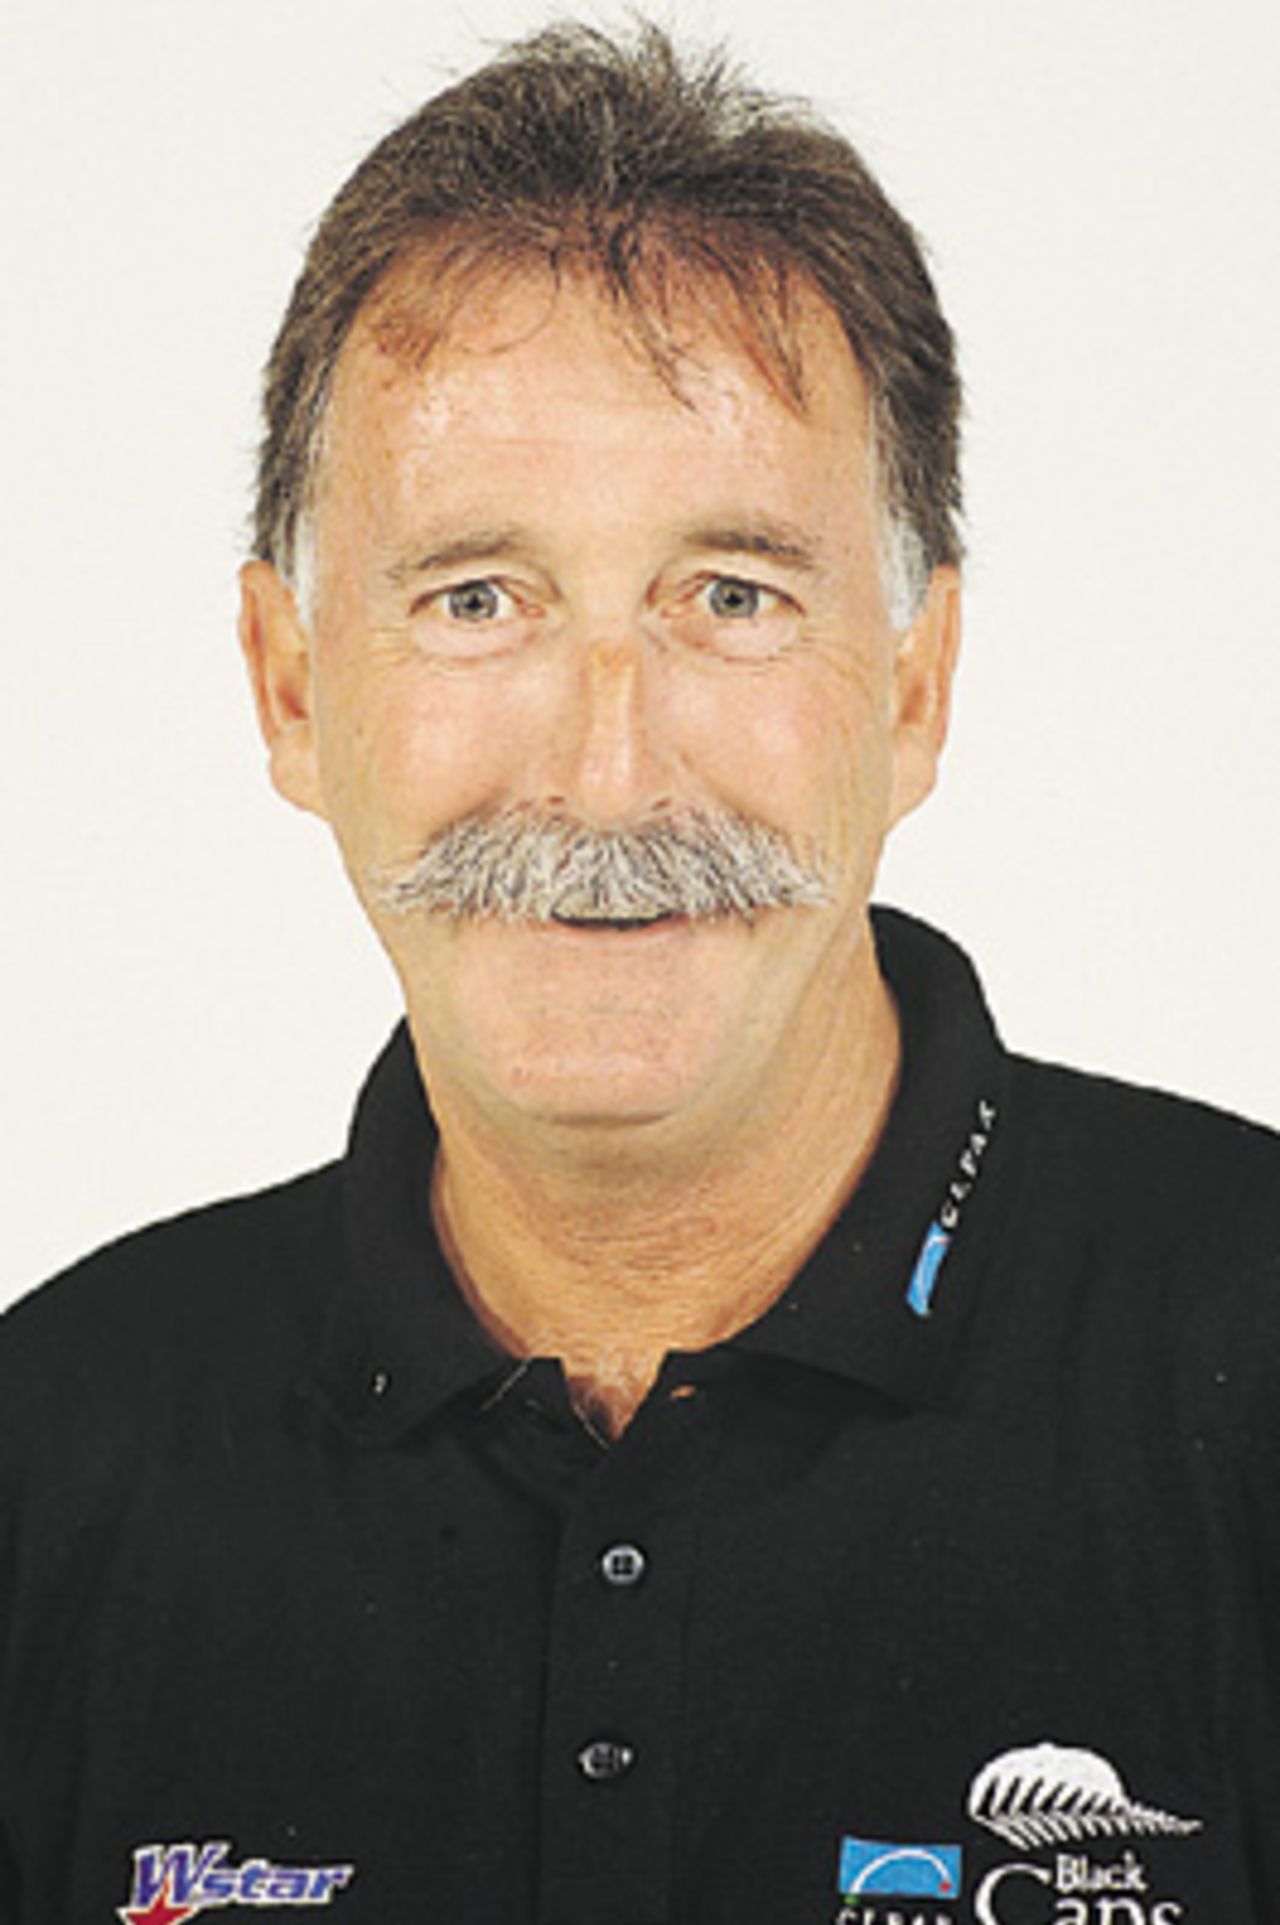 Portrait of David Trist - New Zealand coach in the 2000/01 season